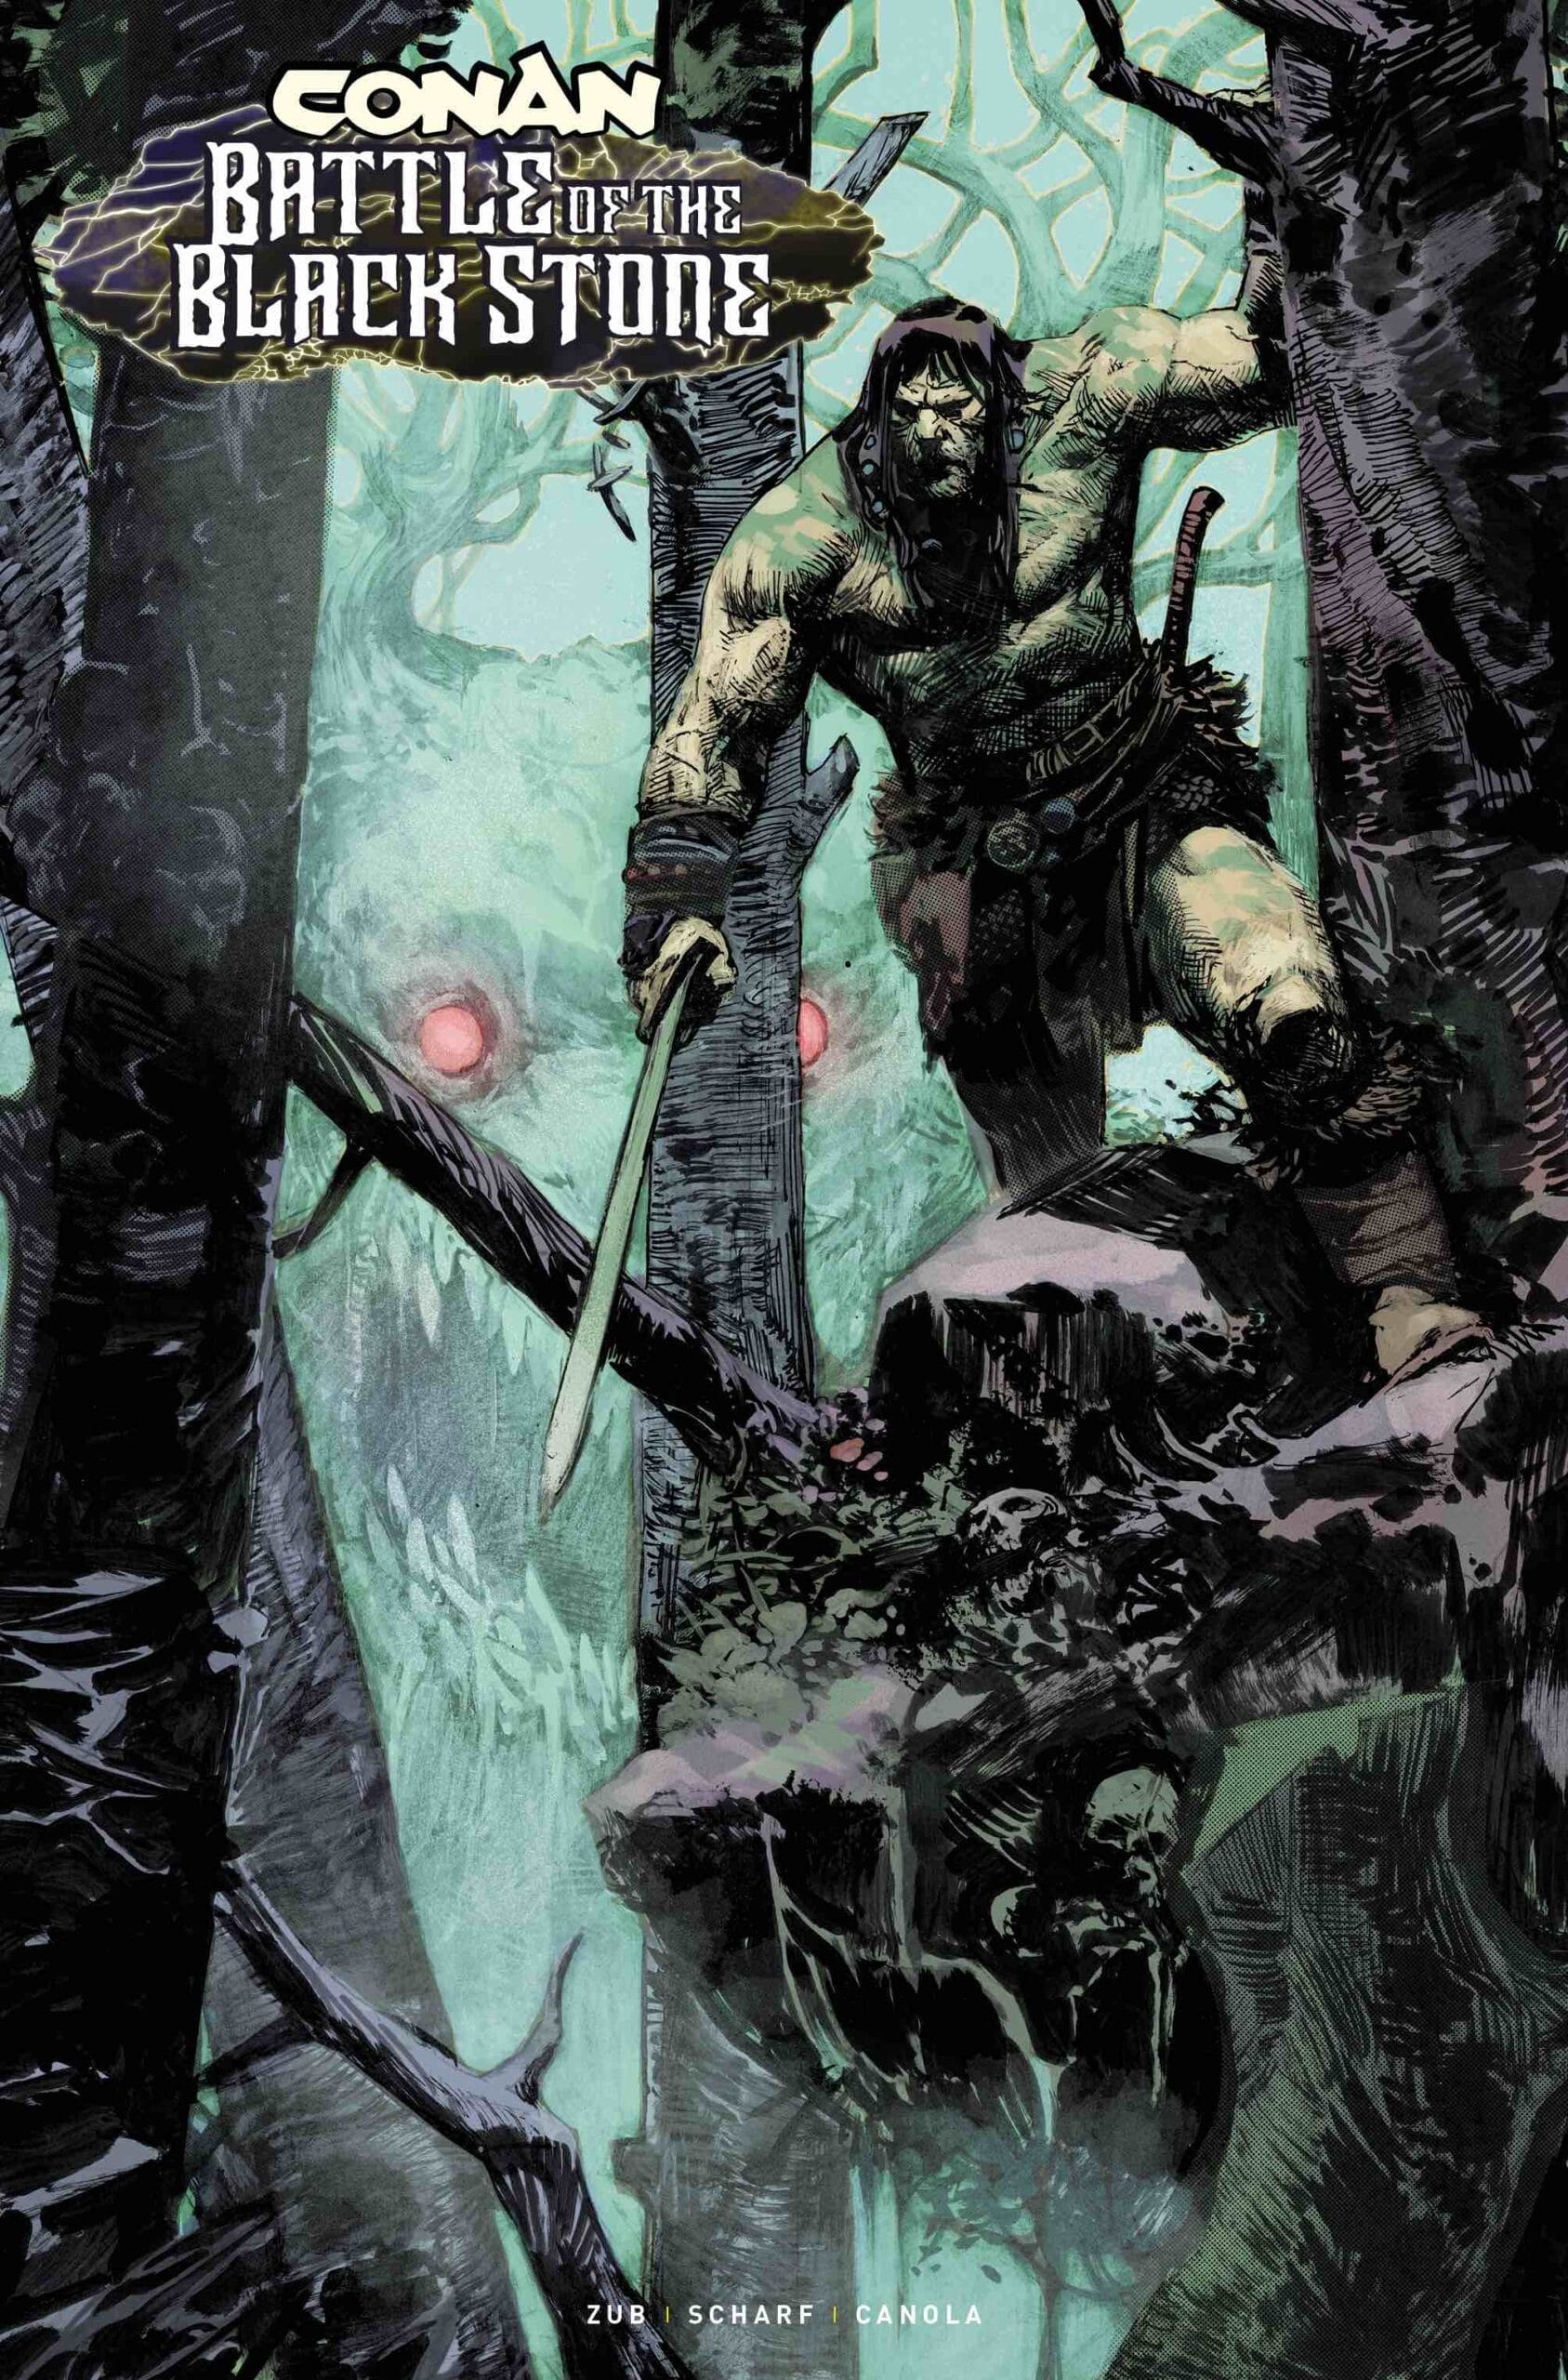 Comic book cover: Conan in creepy woods